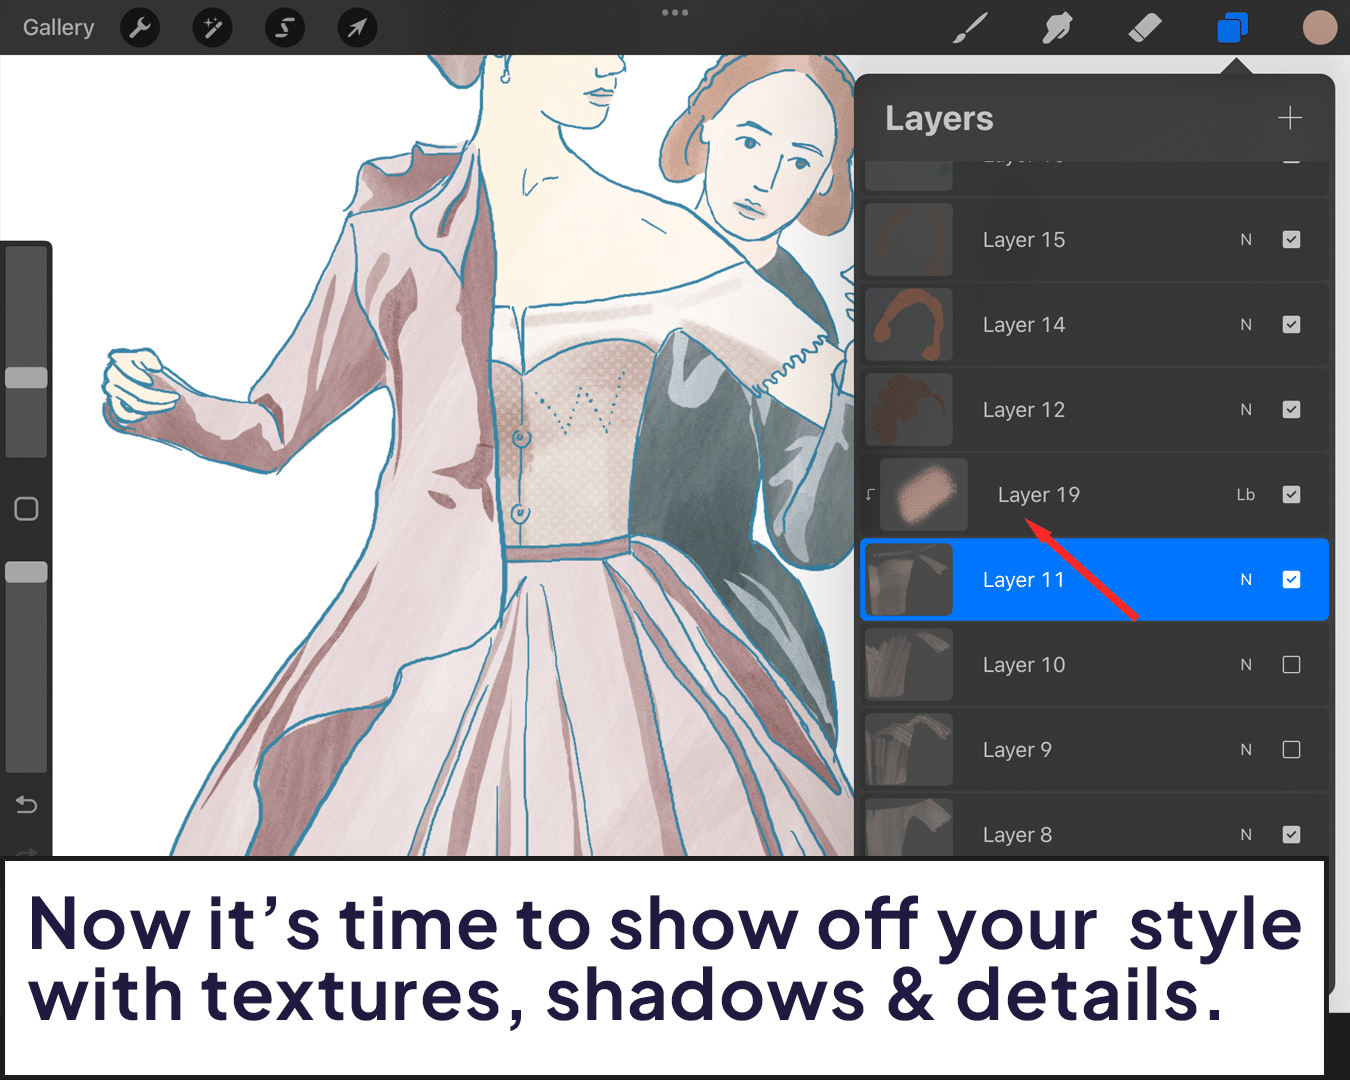 Adding textures, shadows & details 